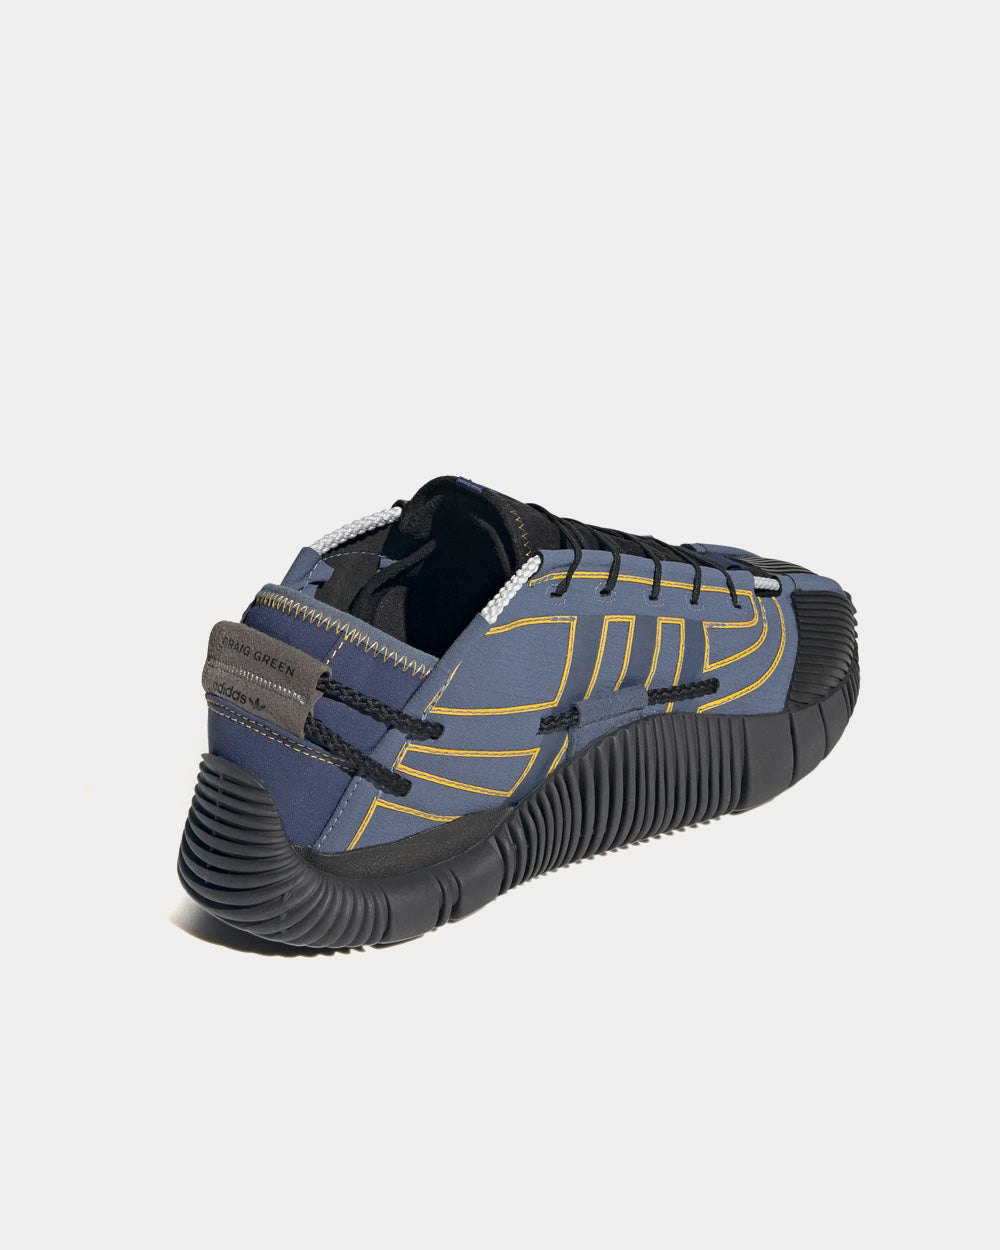 Adidas x Craig Green - Scuba Phormar Tech Ink Low Top Sneakers